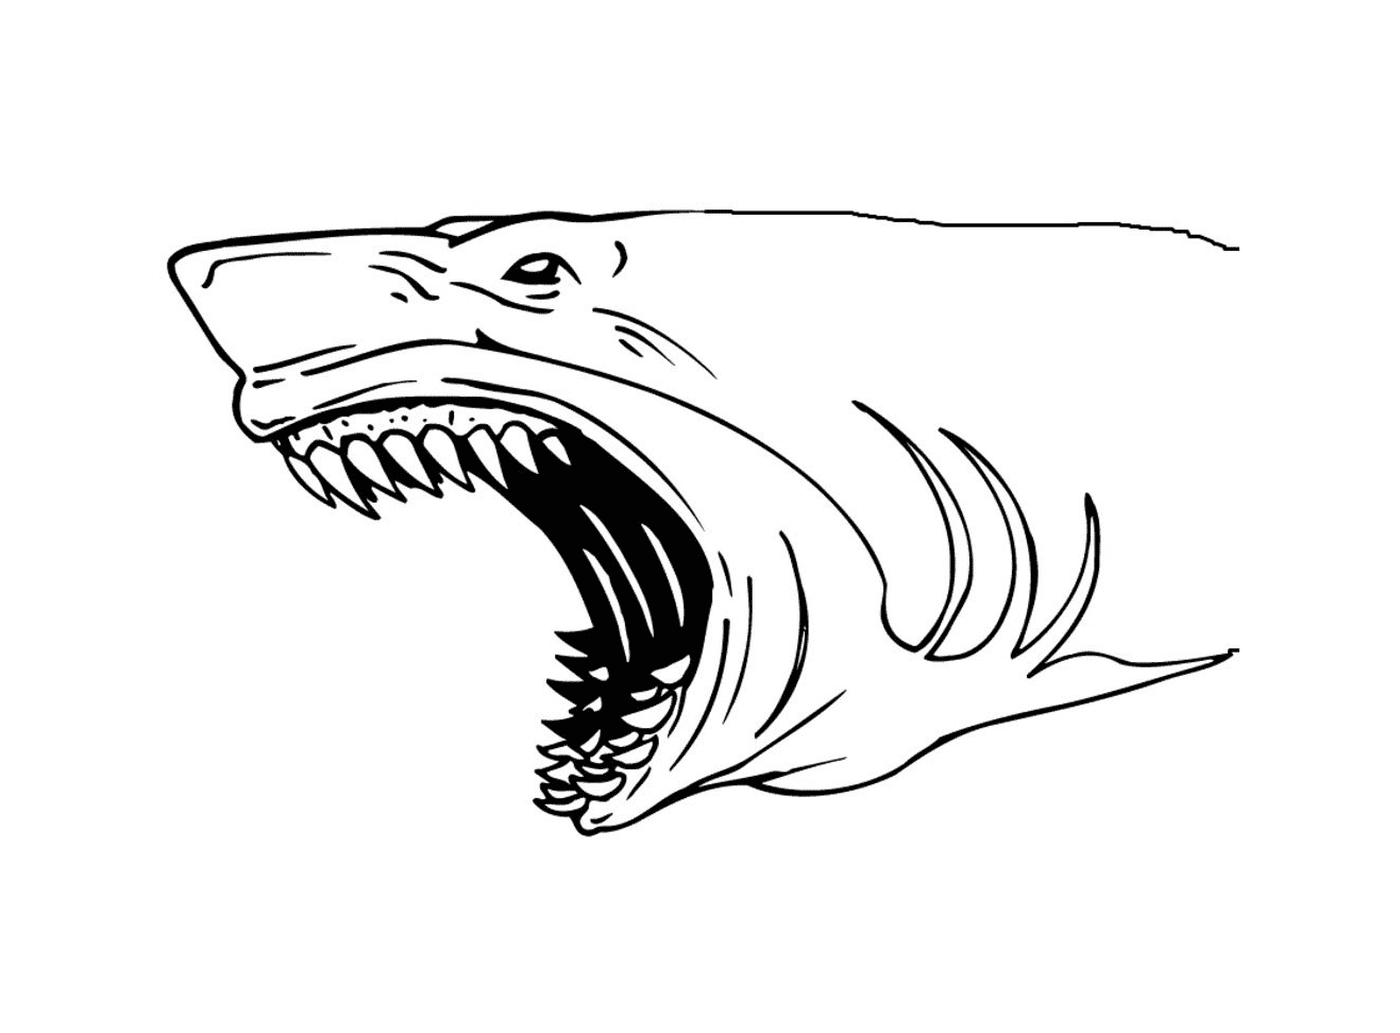  Shark with large teeth 